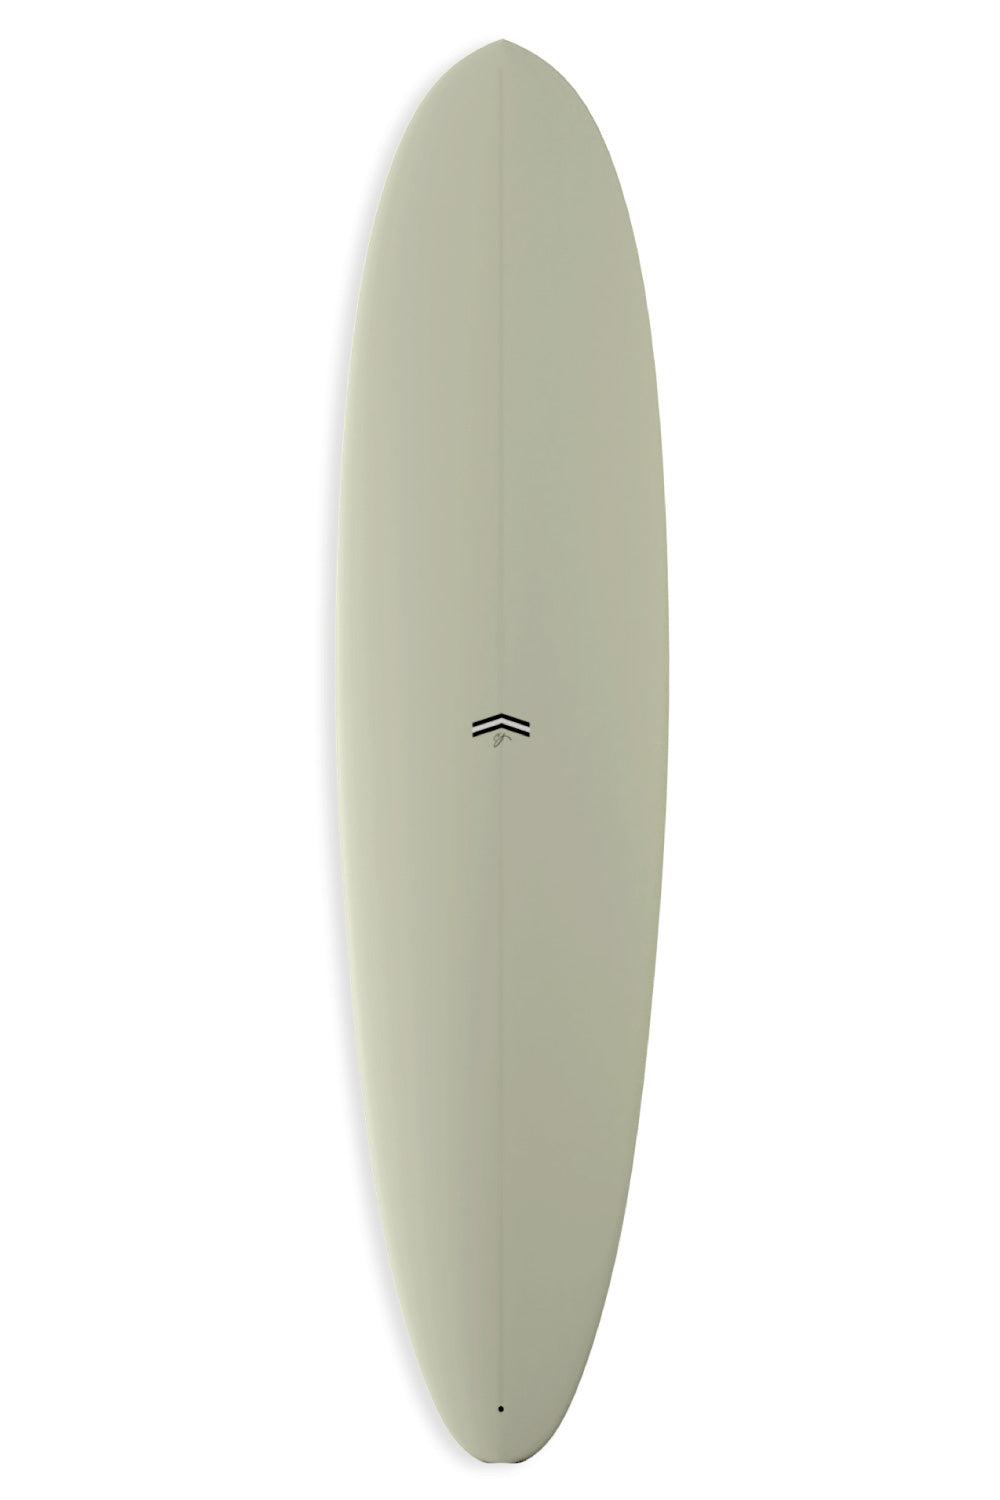 Firewire Thunderbolt Outlier Mid Length Surfboard